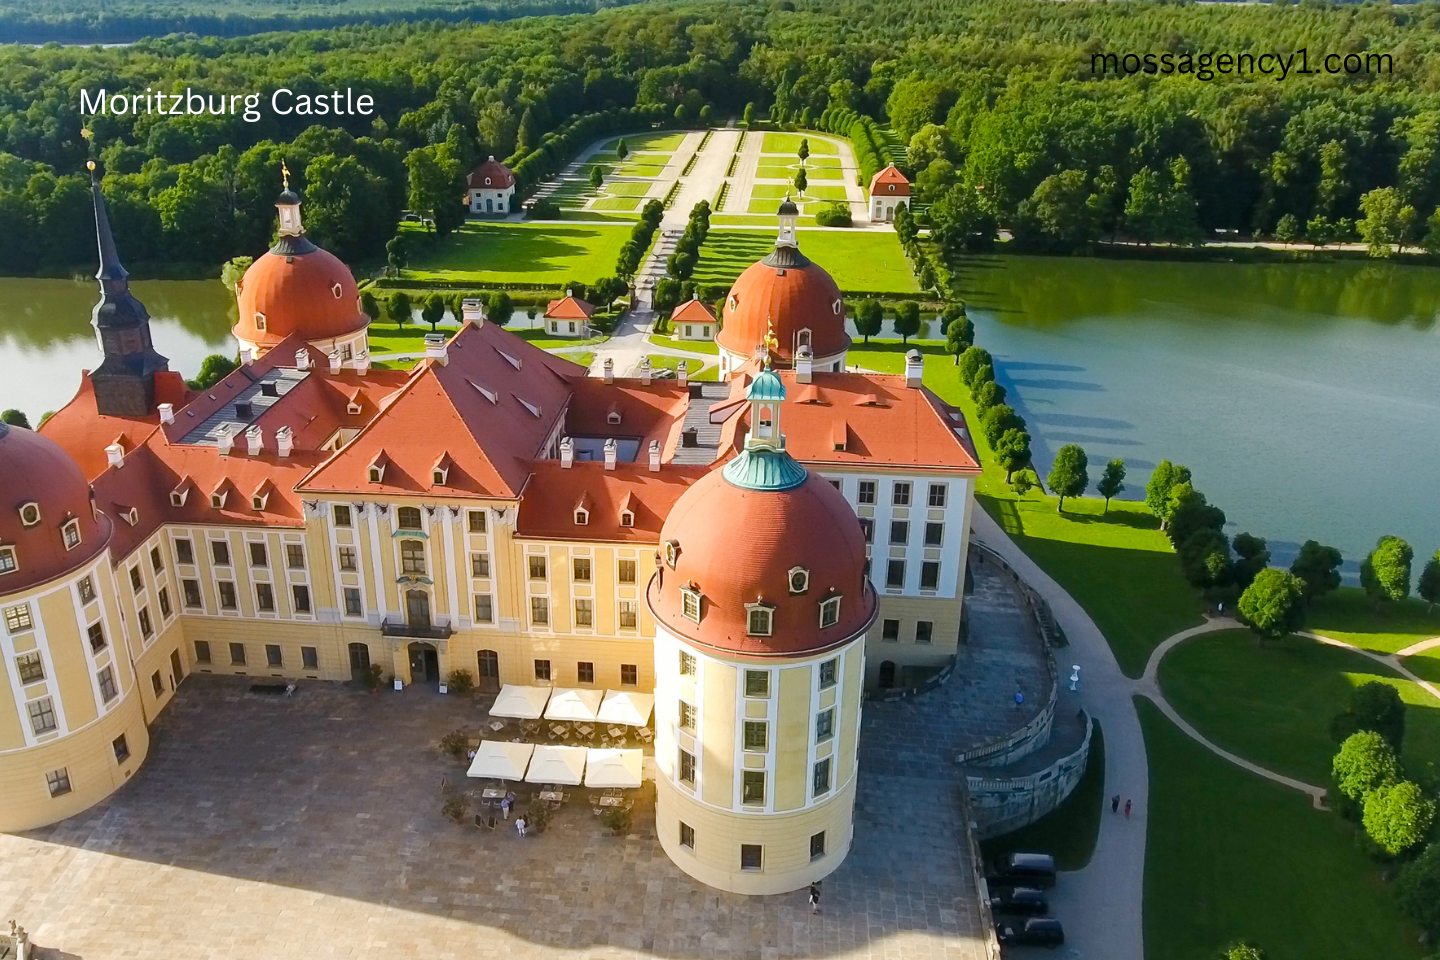 Moritzburg Castle: A Jewel of German Baroque Architecture